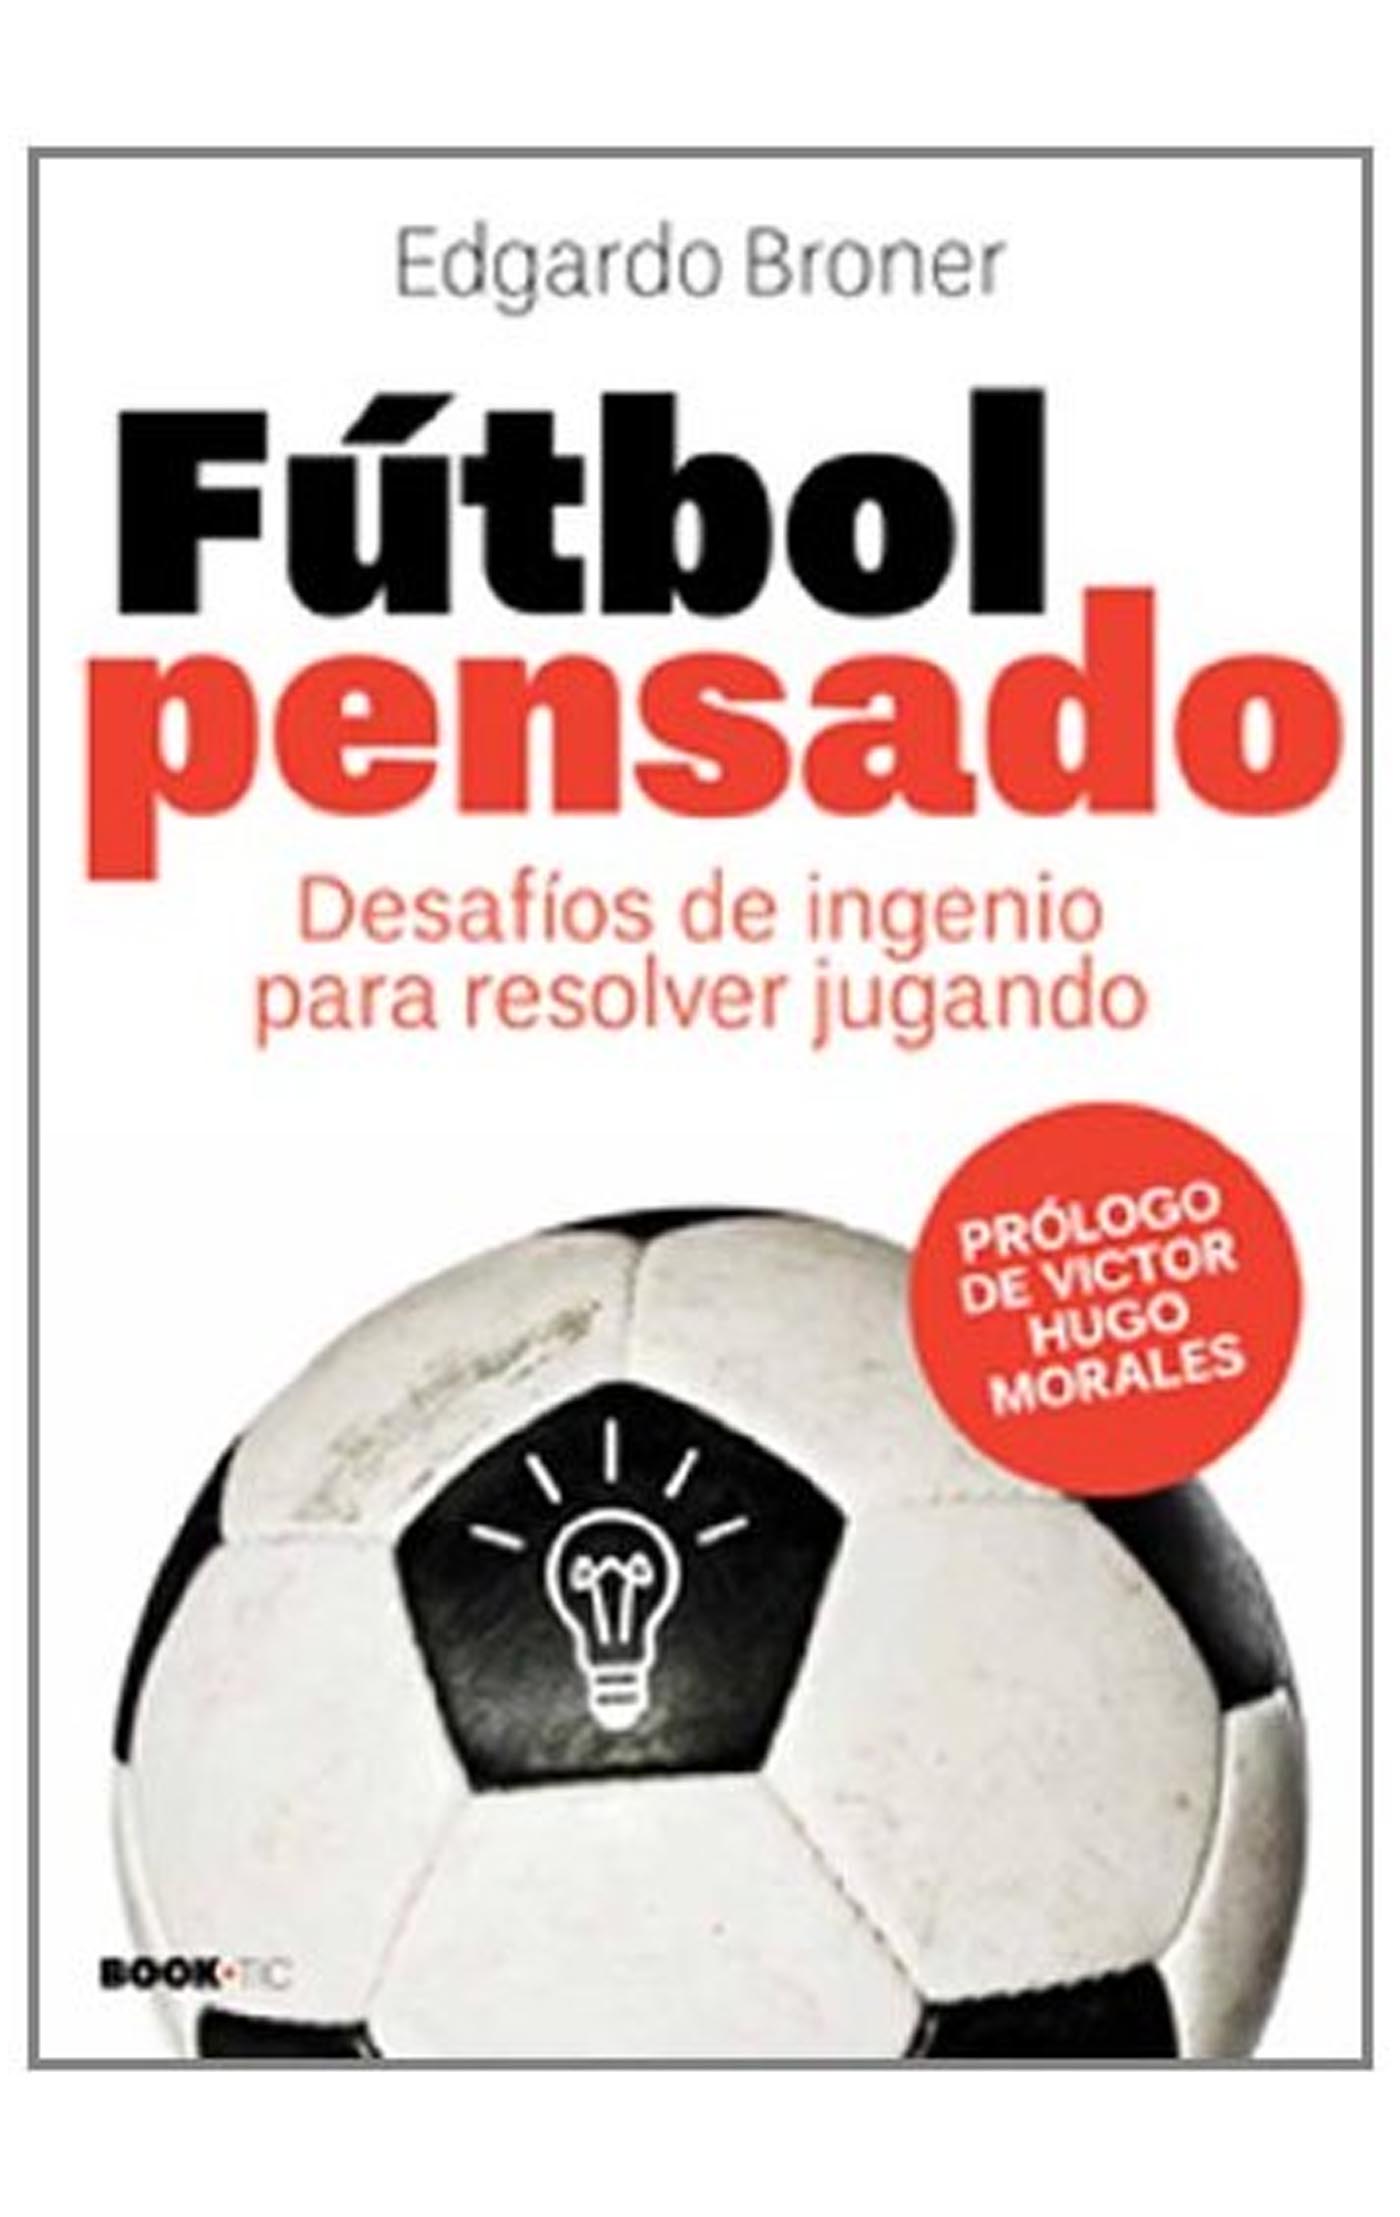 https://libreriafanaticos.com/wp-content/uploads/2021/02/Libro-Futbol-Pensado-desafios-de-ingenio.jpg